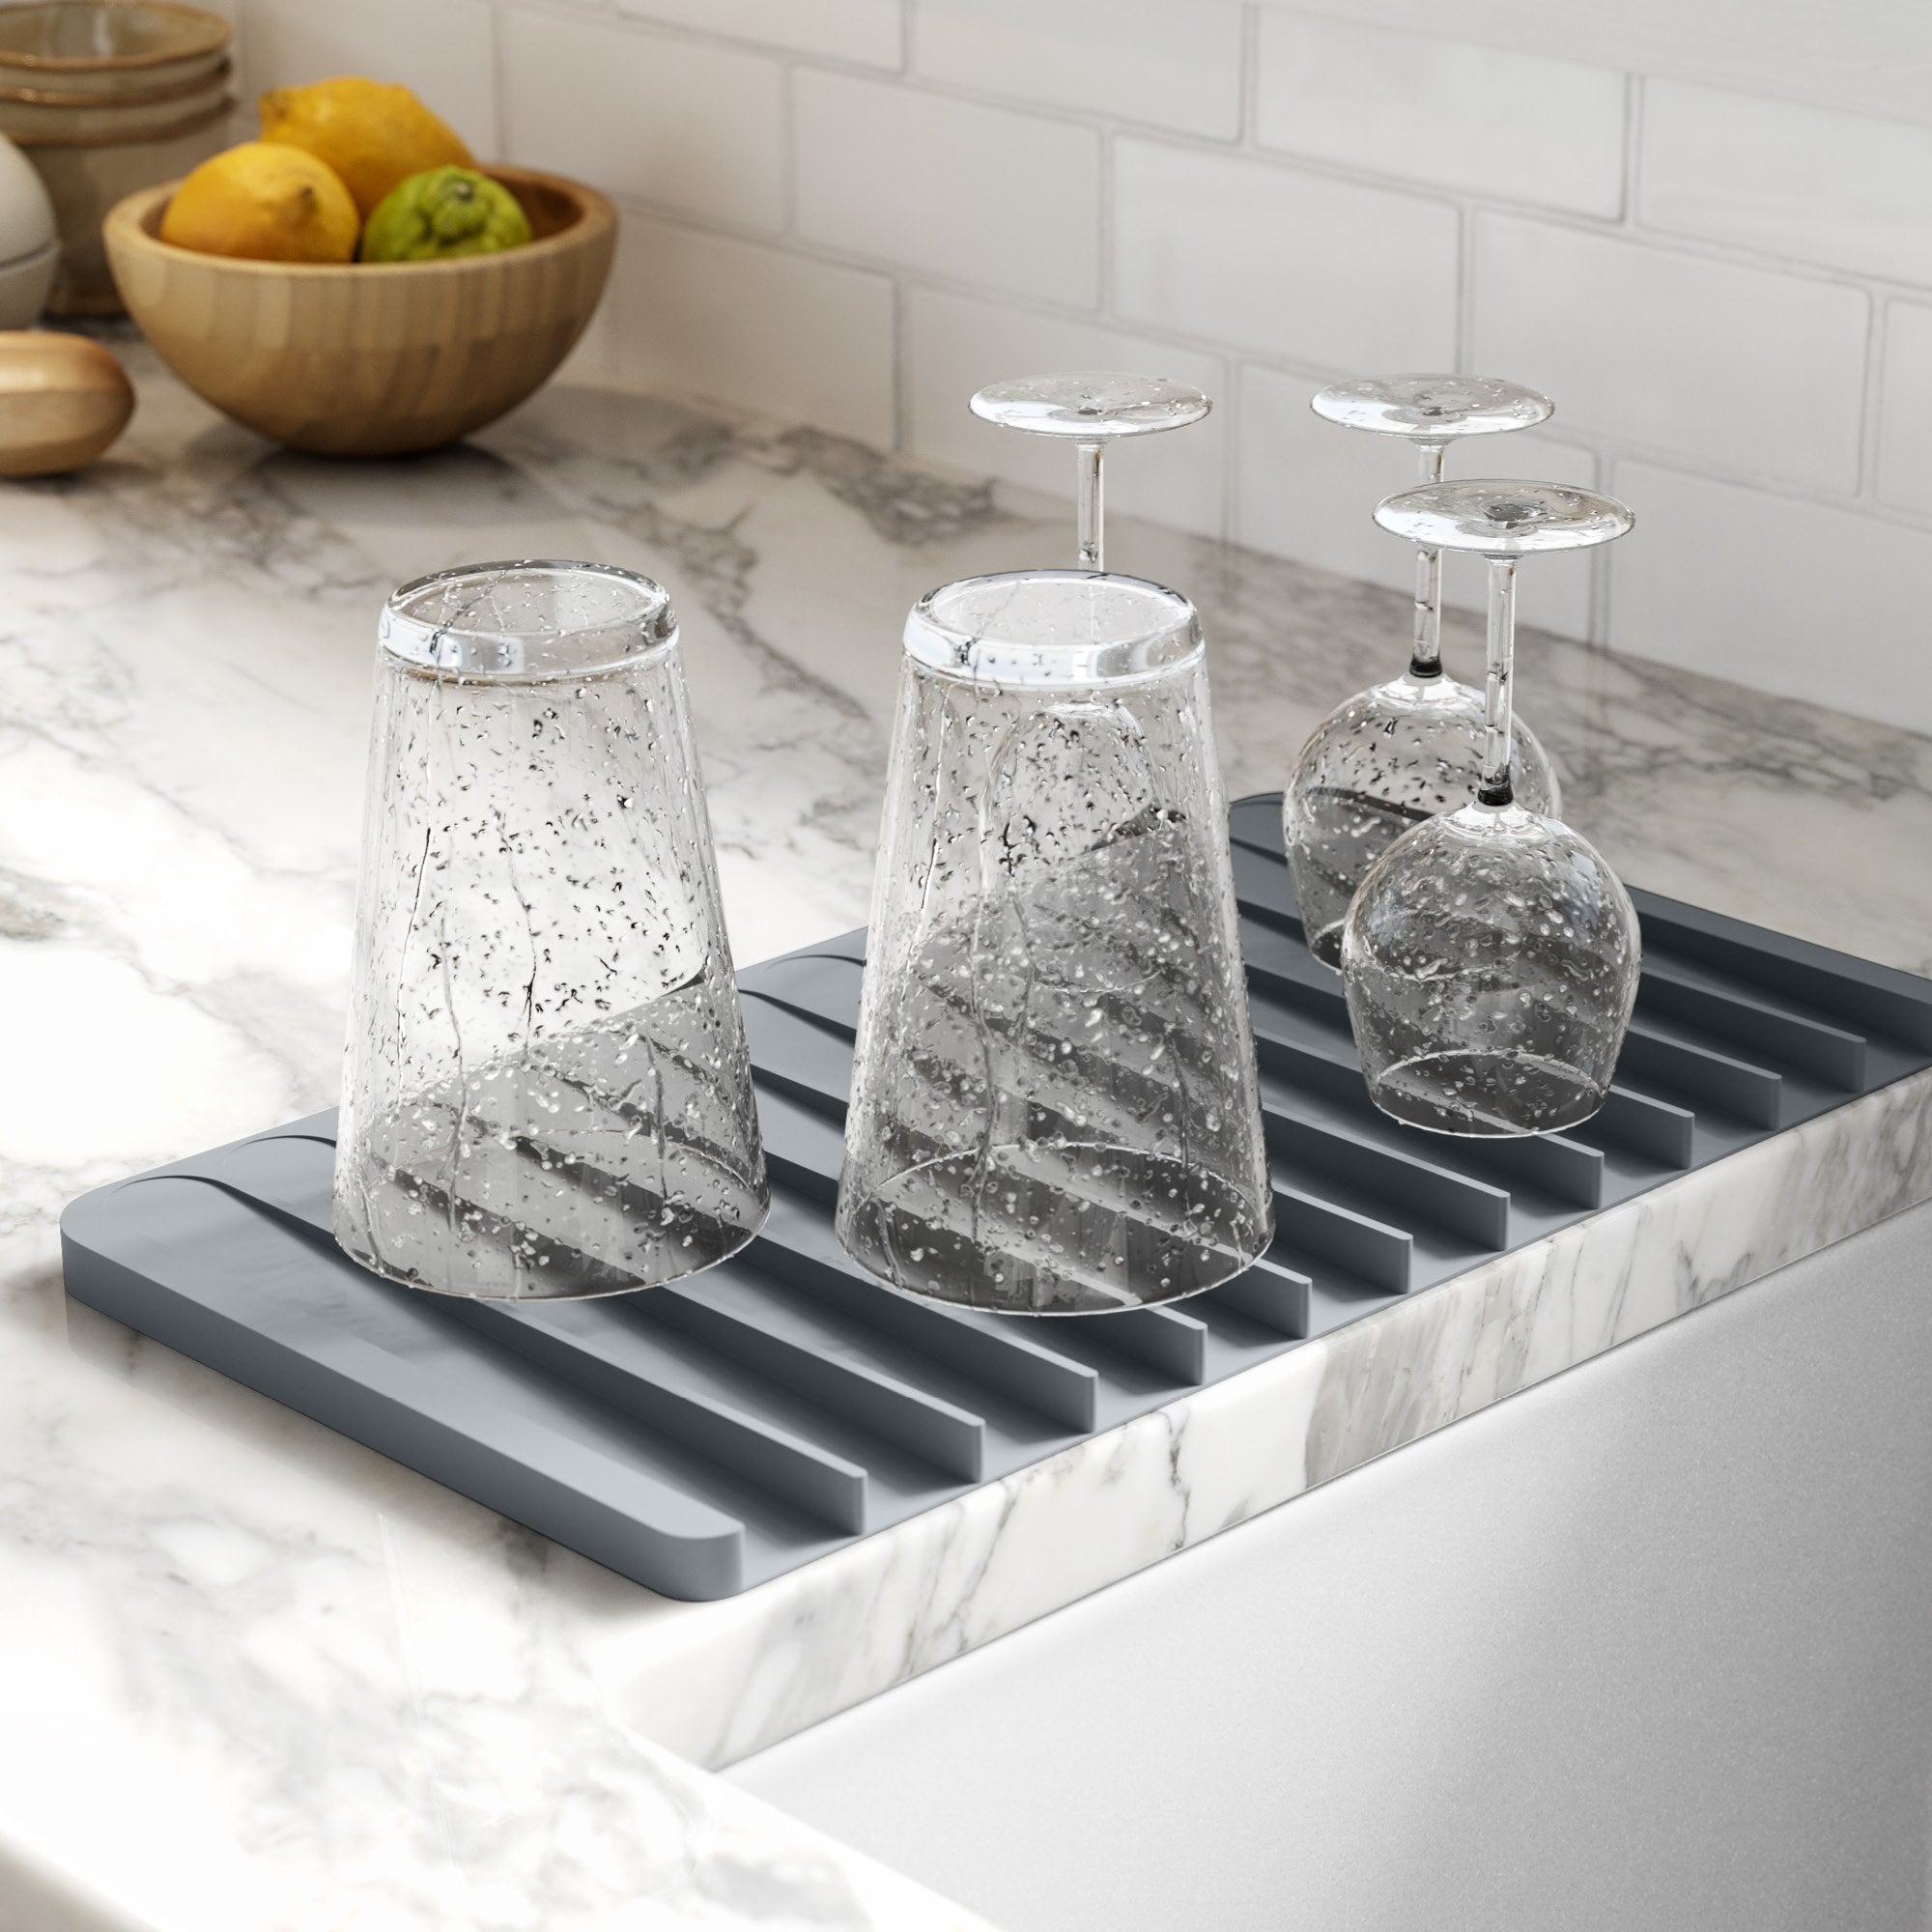 KRAUS Self-Draining Silicone Dish Drying Mat in Light Grey — DirectSinks